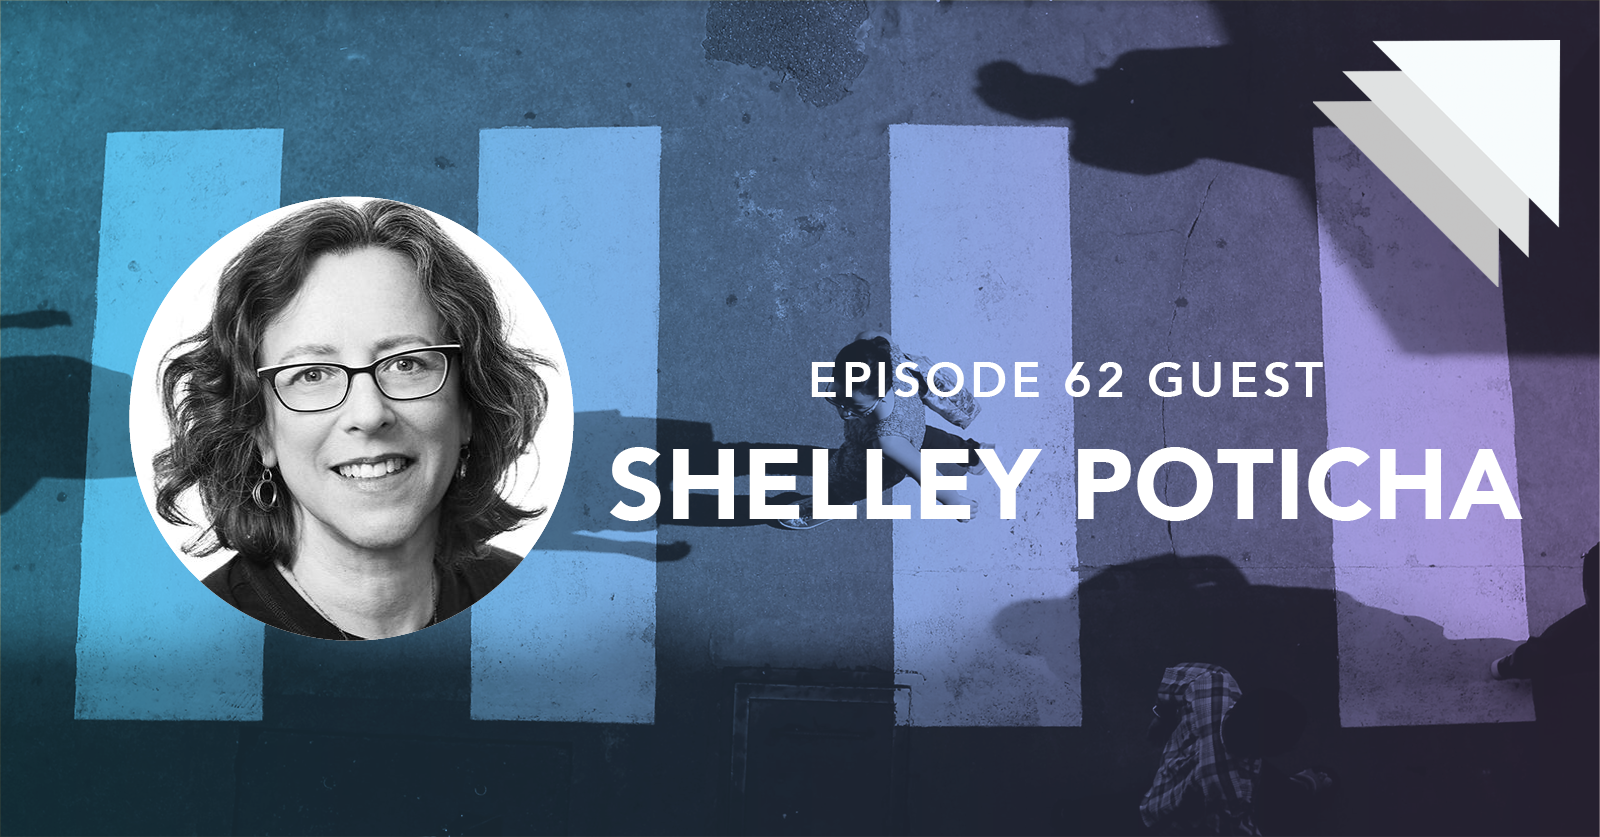 Episode 62 guest Shelley Poticha